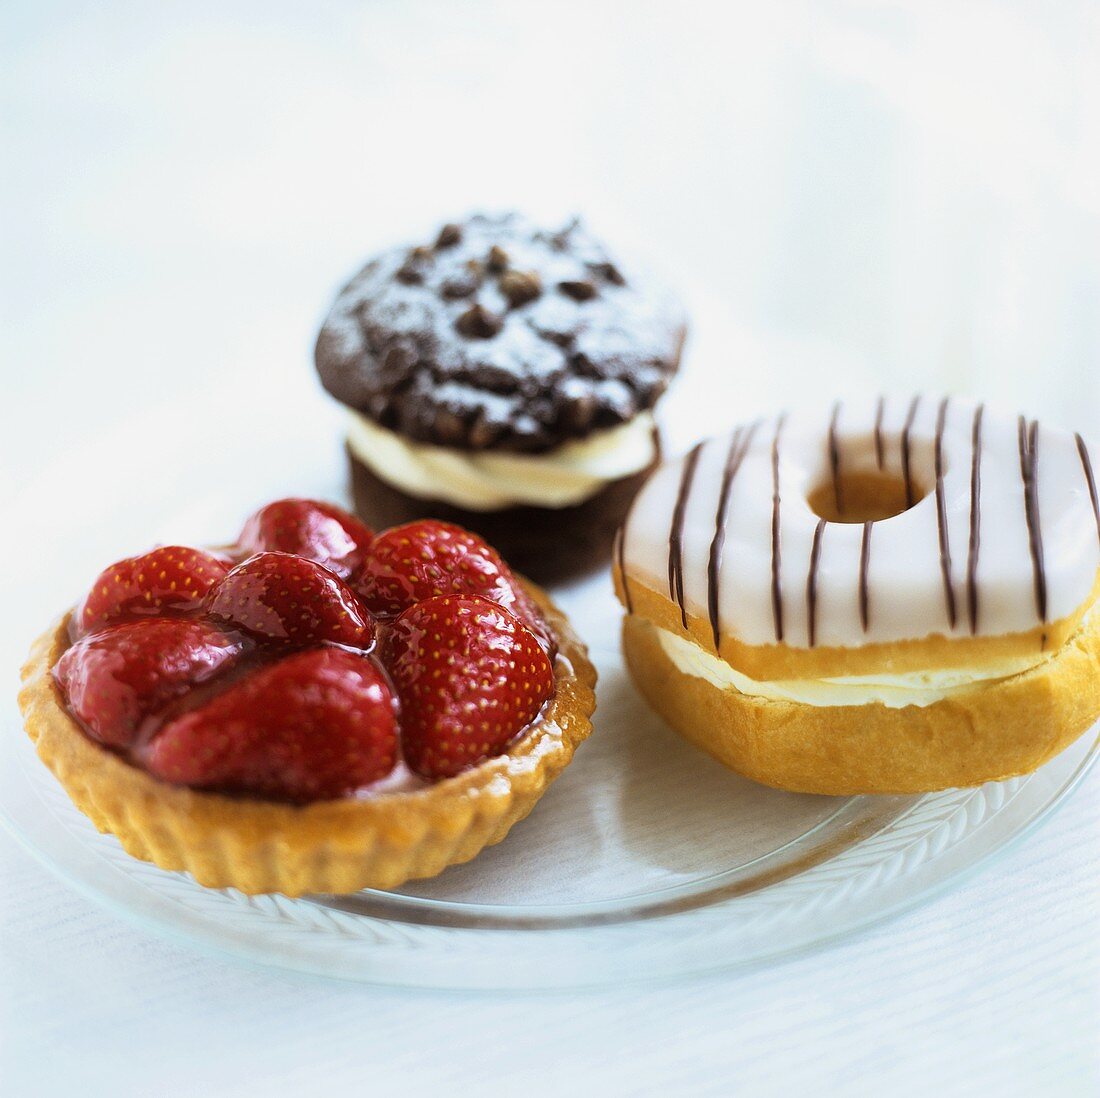 Strawberry tart, chocolate muffin and bagel